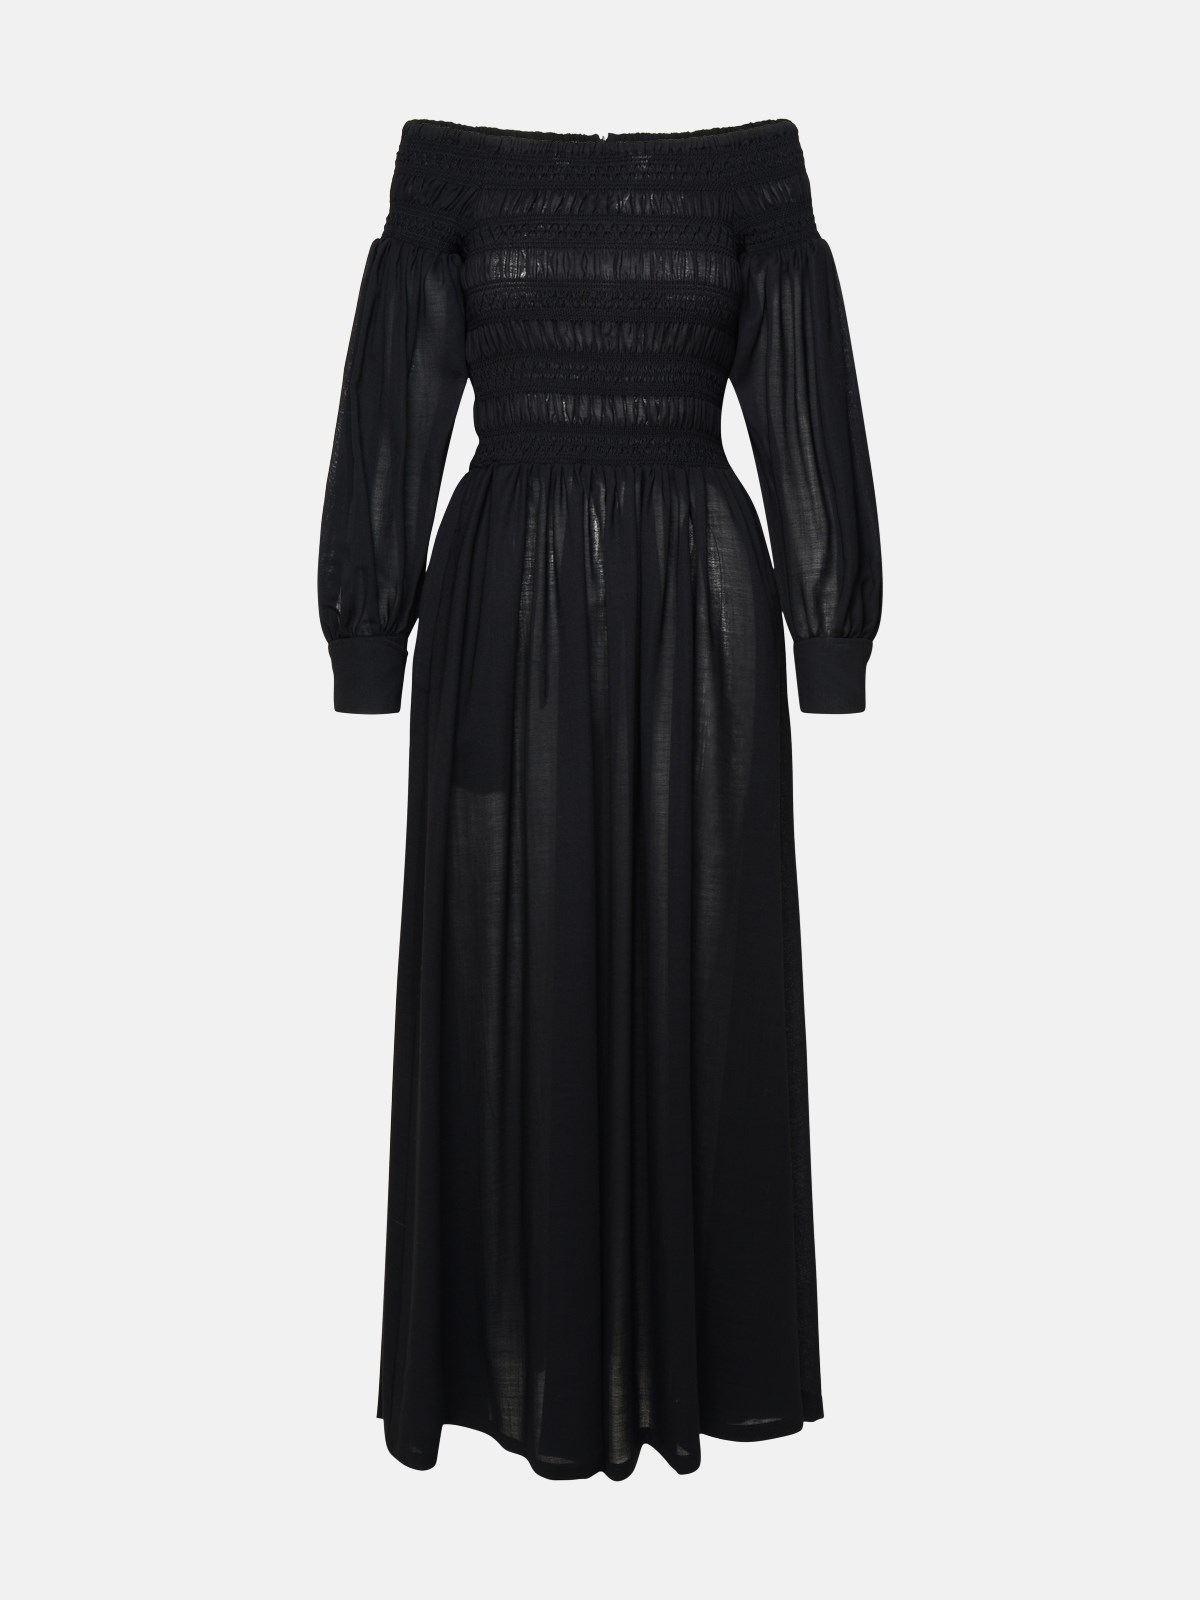 Max Mara Black Virgin Wool Dress